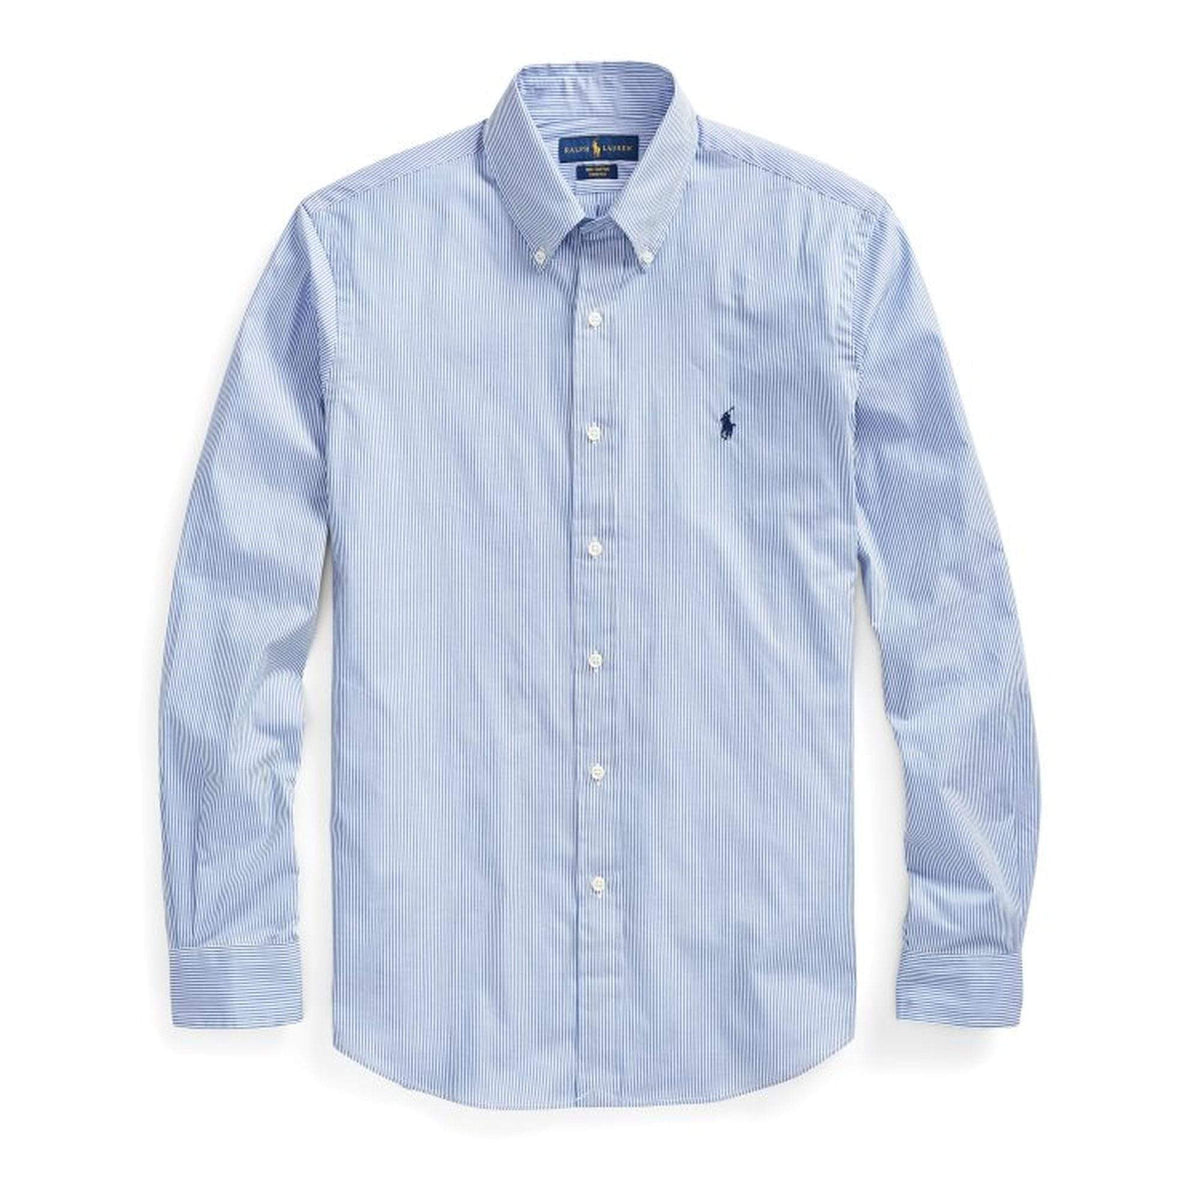 Polo Ralph Lauren Shirts Polo Ralph Lauren Blue and White Striped Poplin Shirt